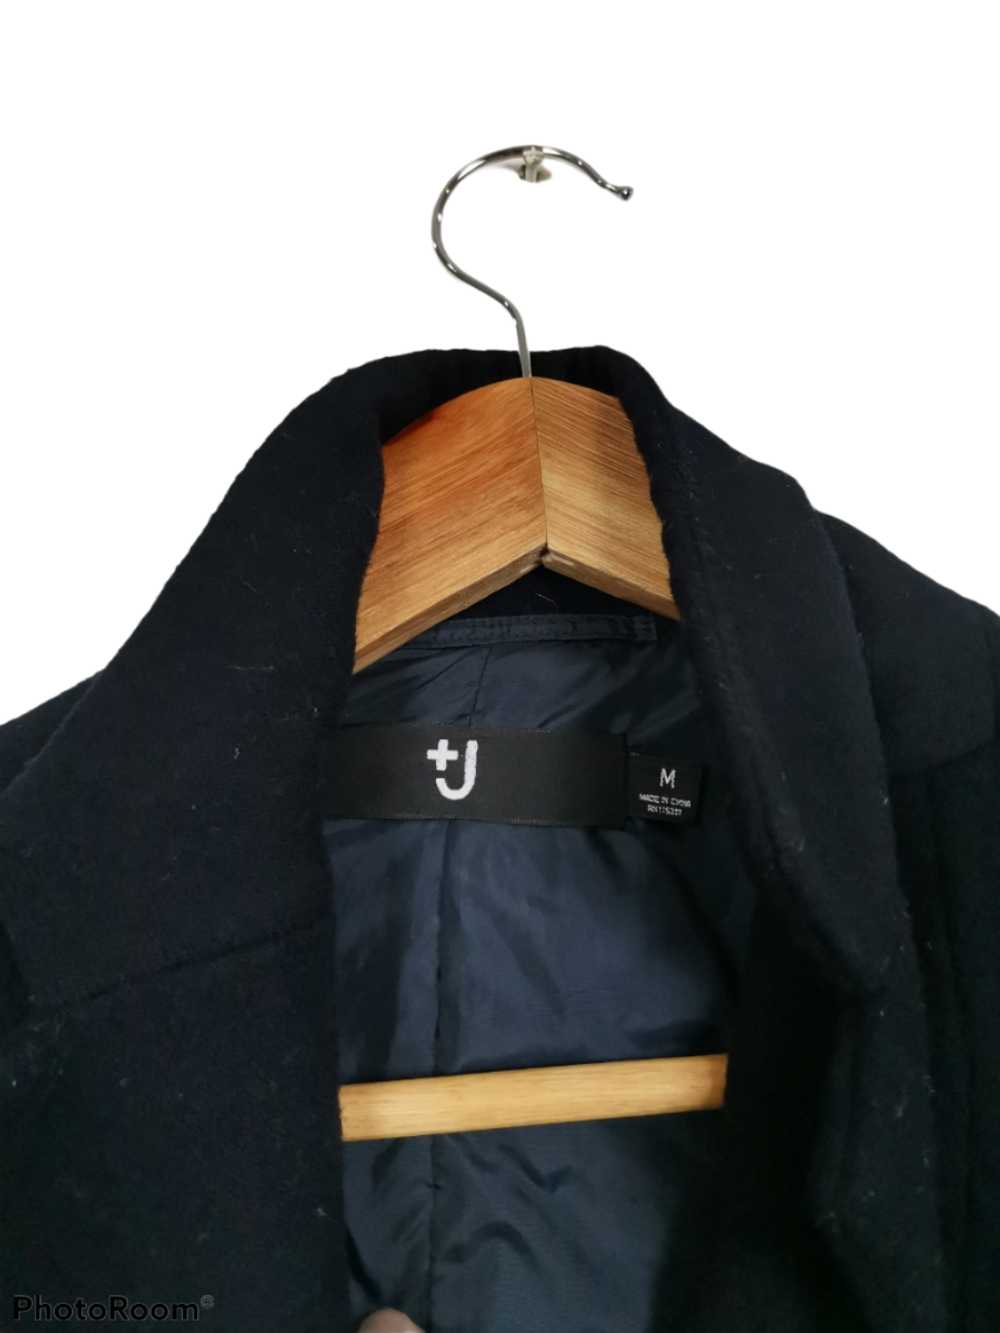 Uniqlo - Uniqlo x Jil Sander +J Wool Long Coat - image 2